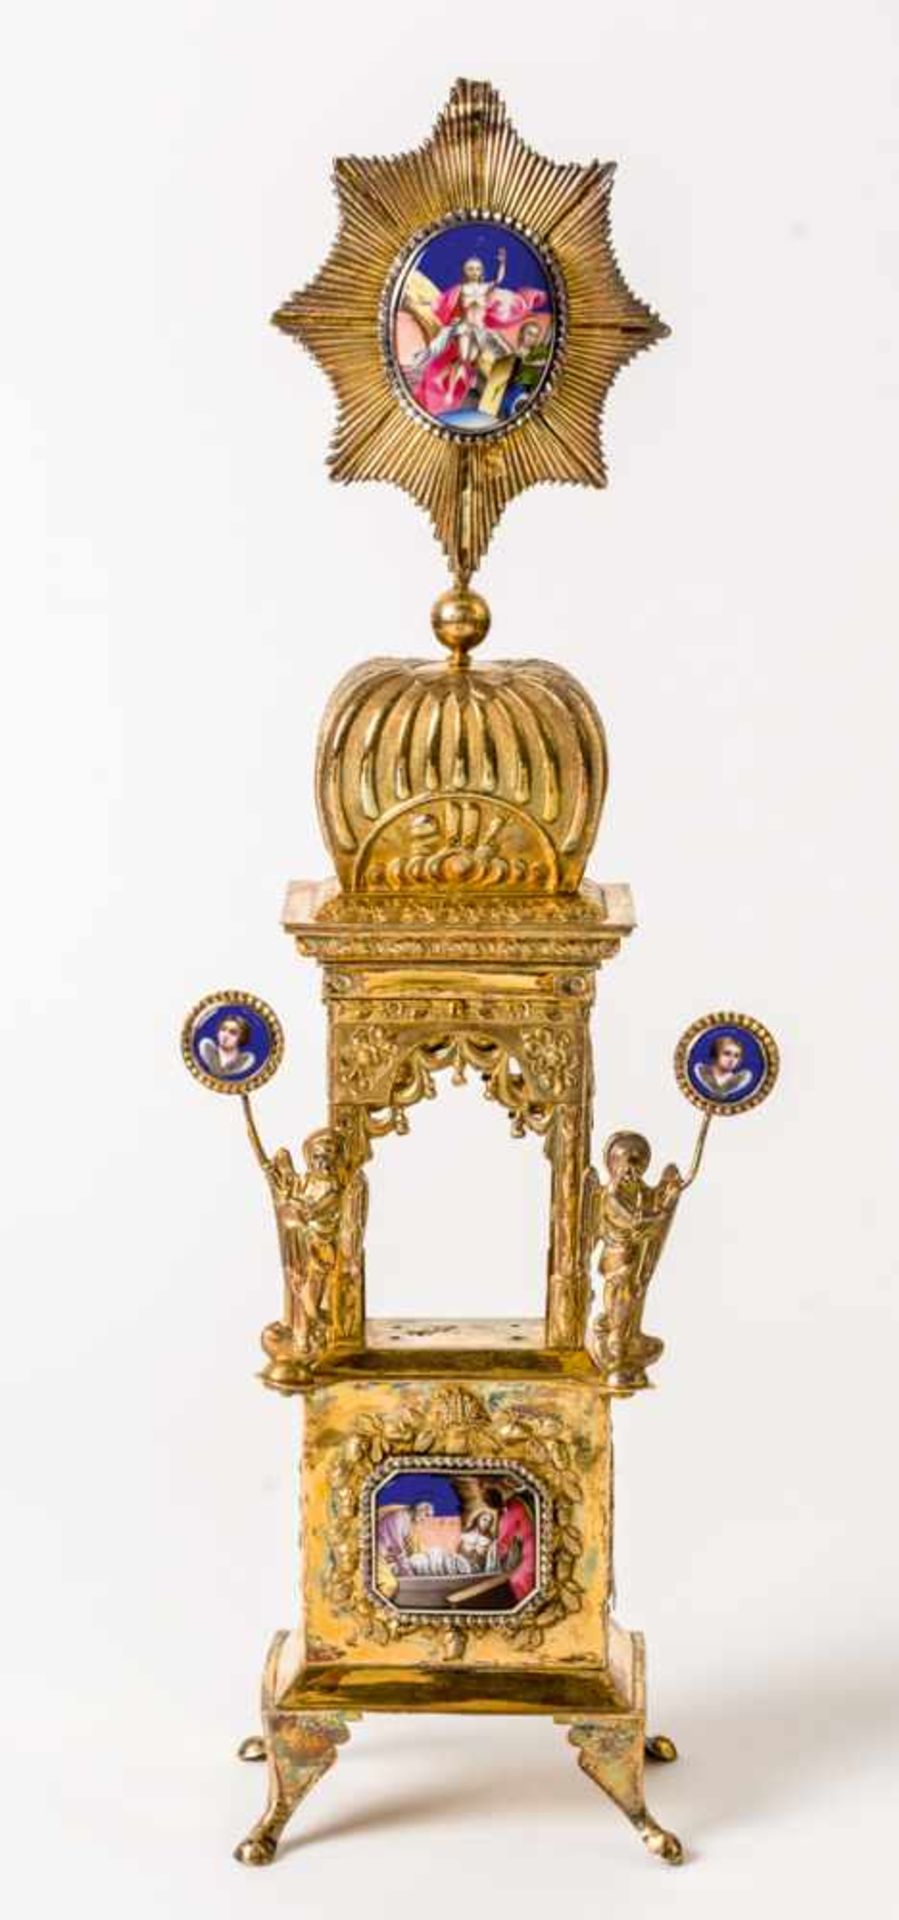 Artophorion Silber vergoldet, mit Finifti, Moskau 1828 Beschaumeister: Nicholai Dubrovin (1822-1855)